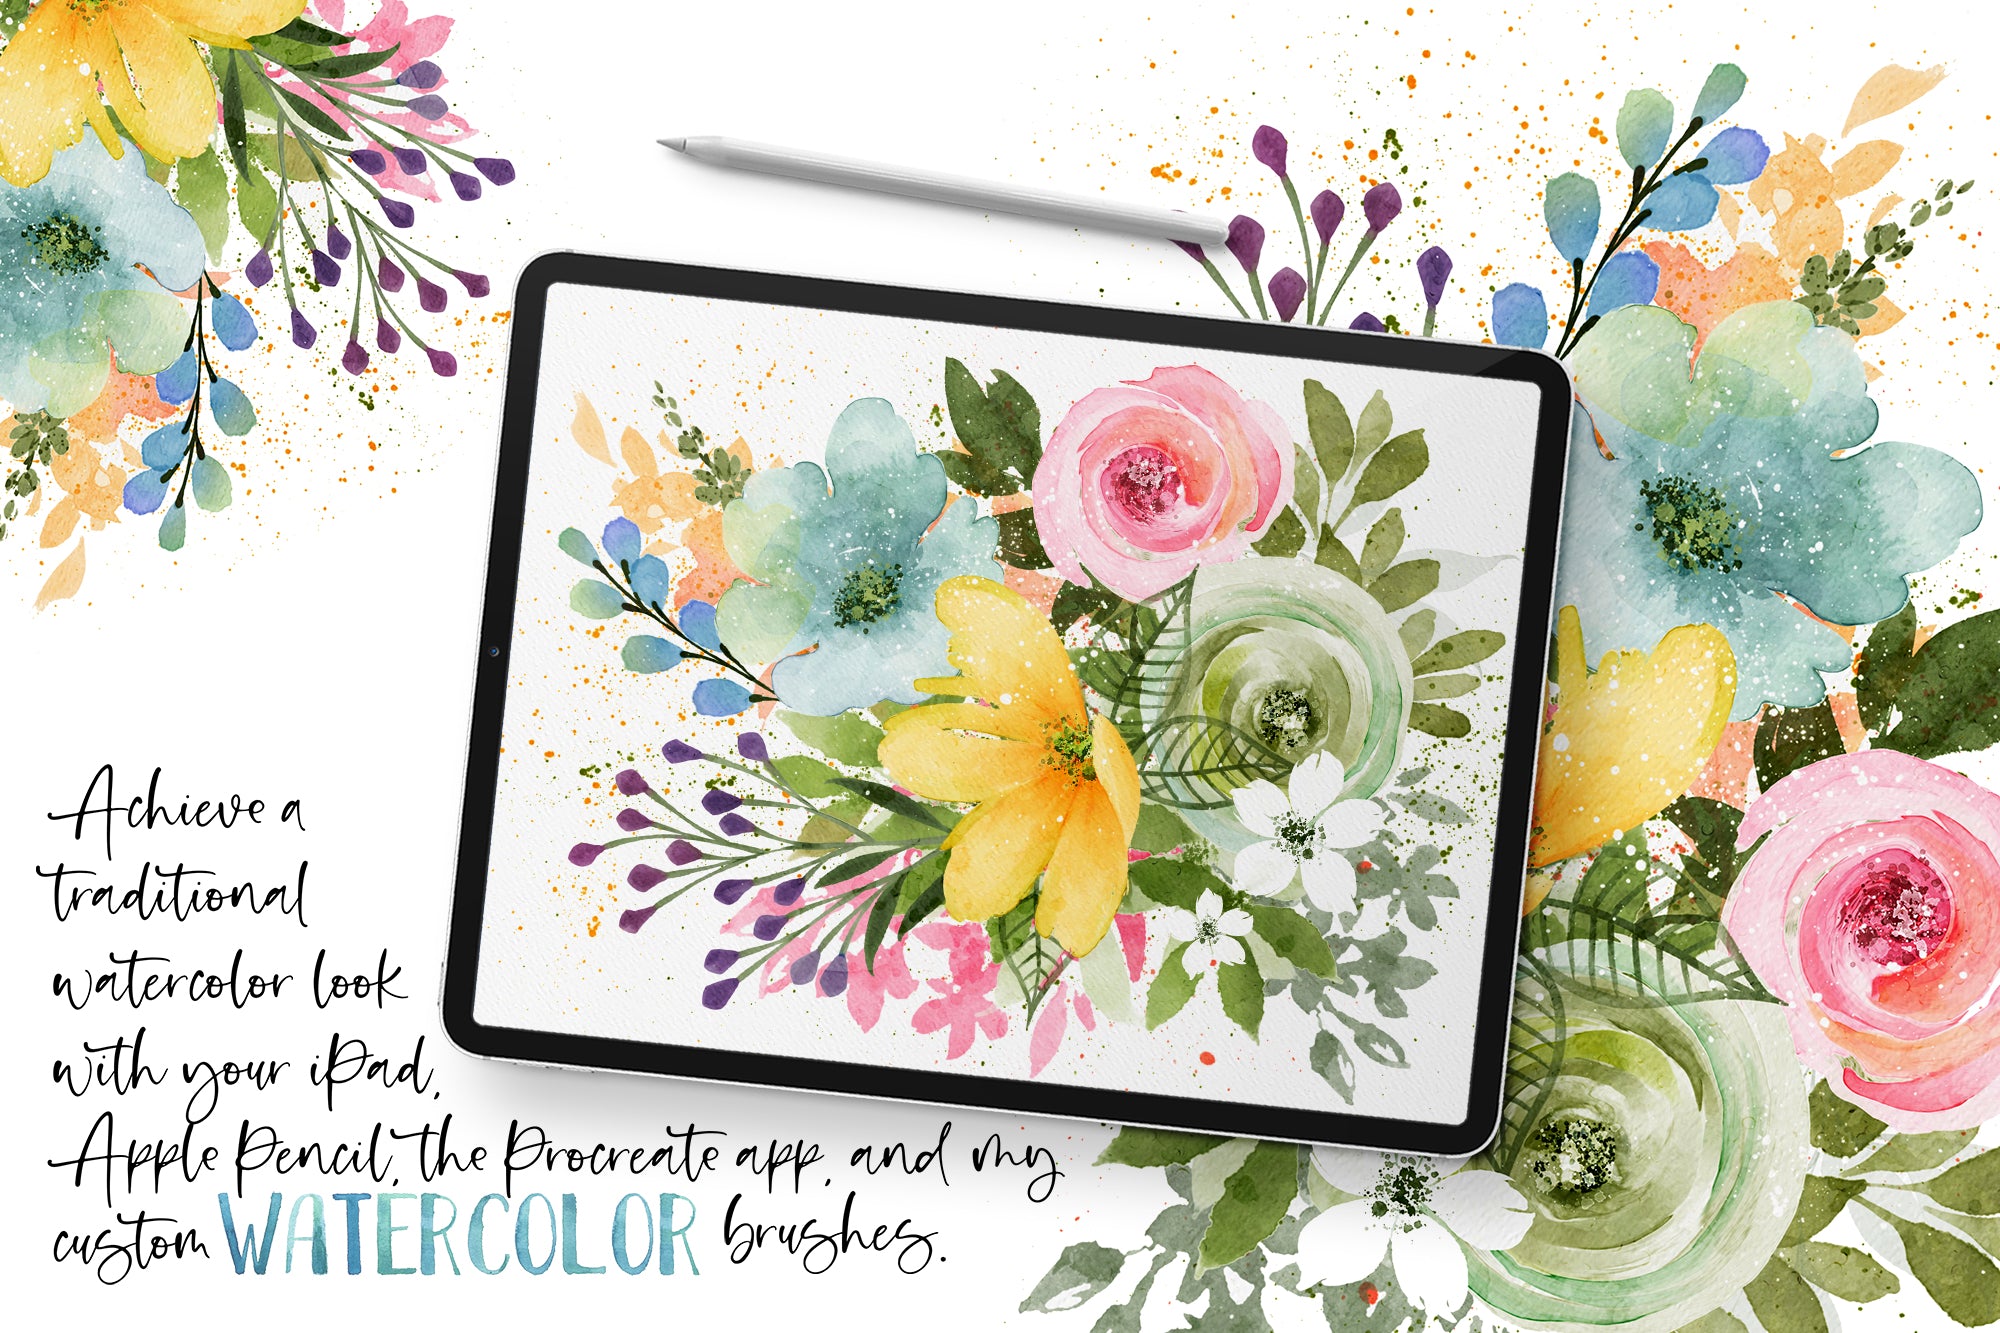 watercolor sets & brushes - Sweet Bella